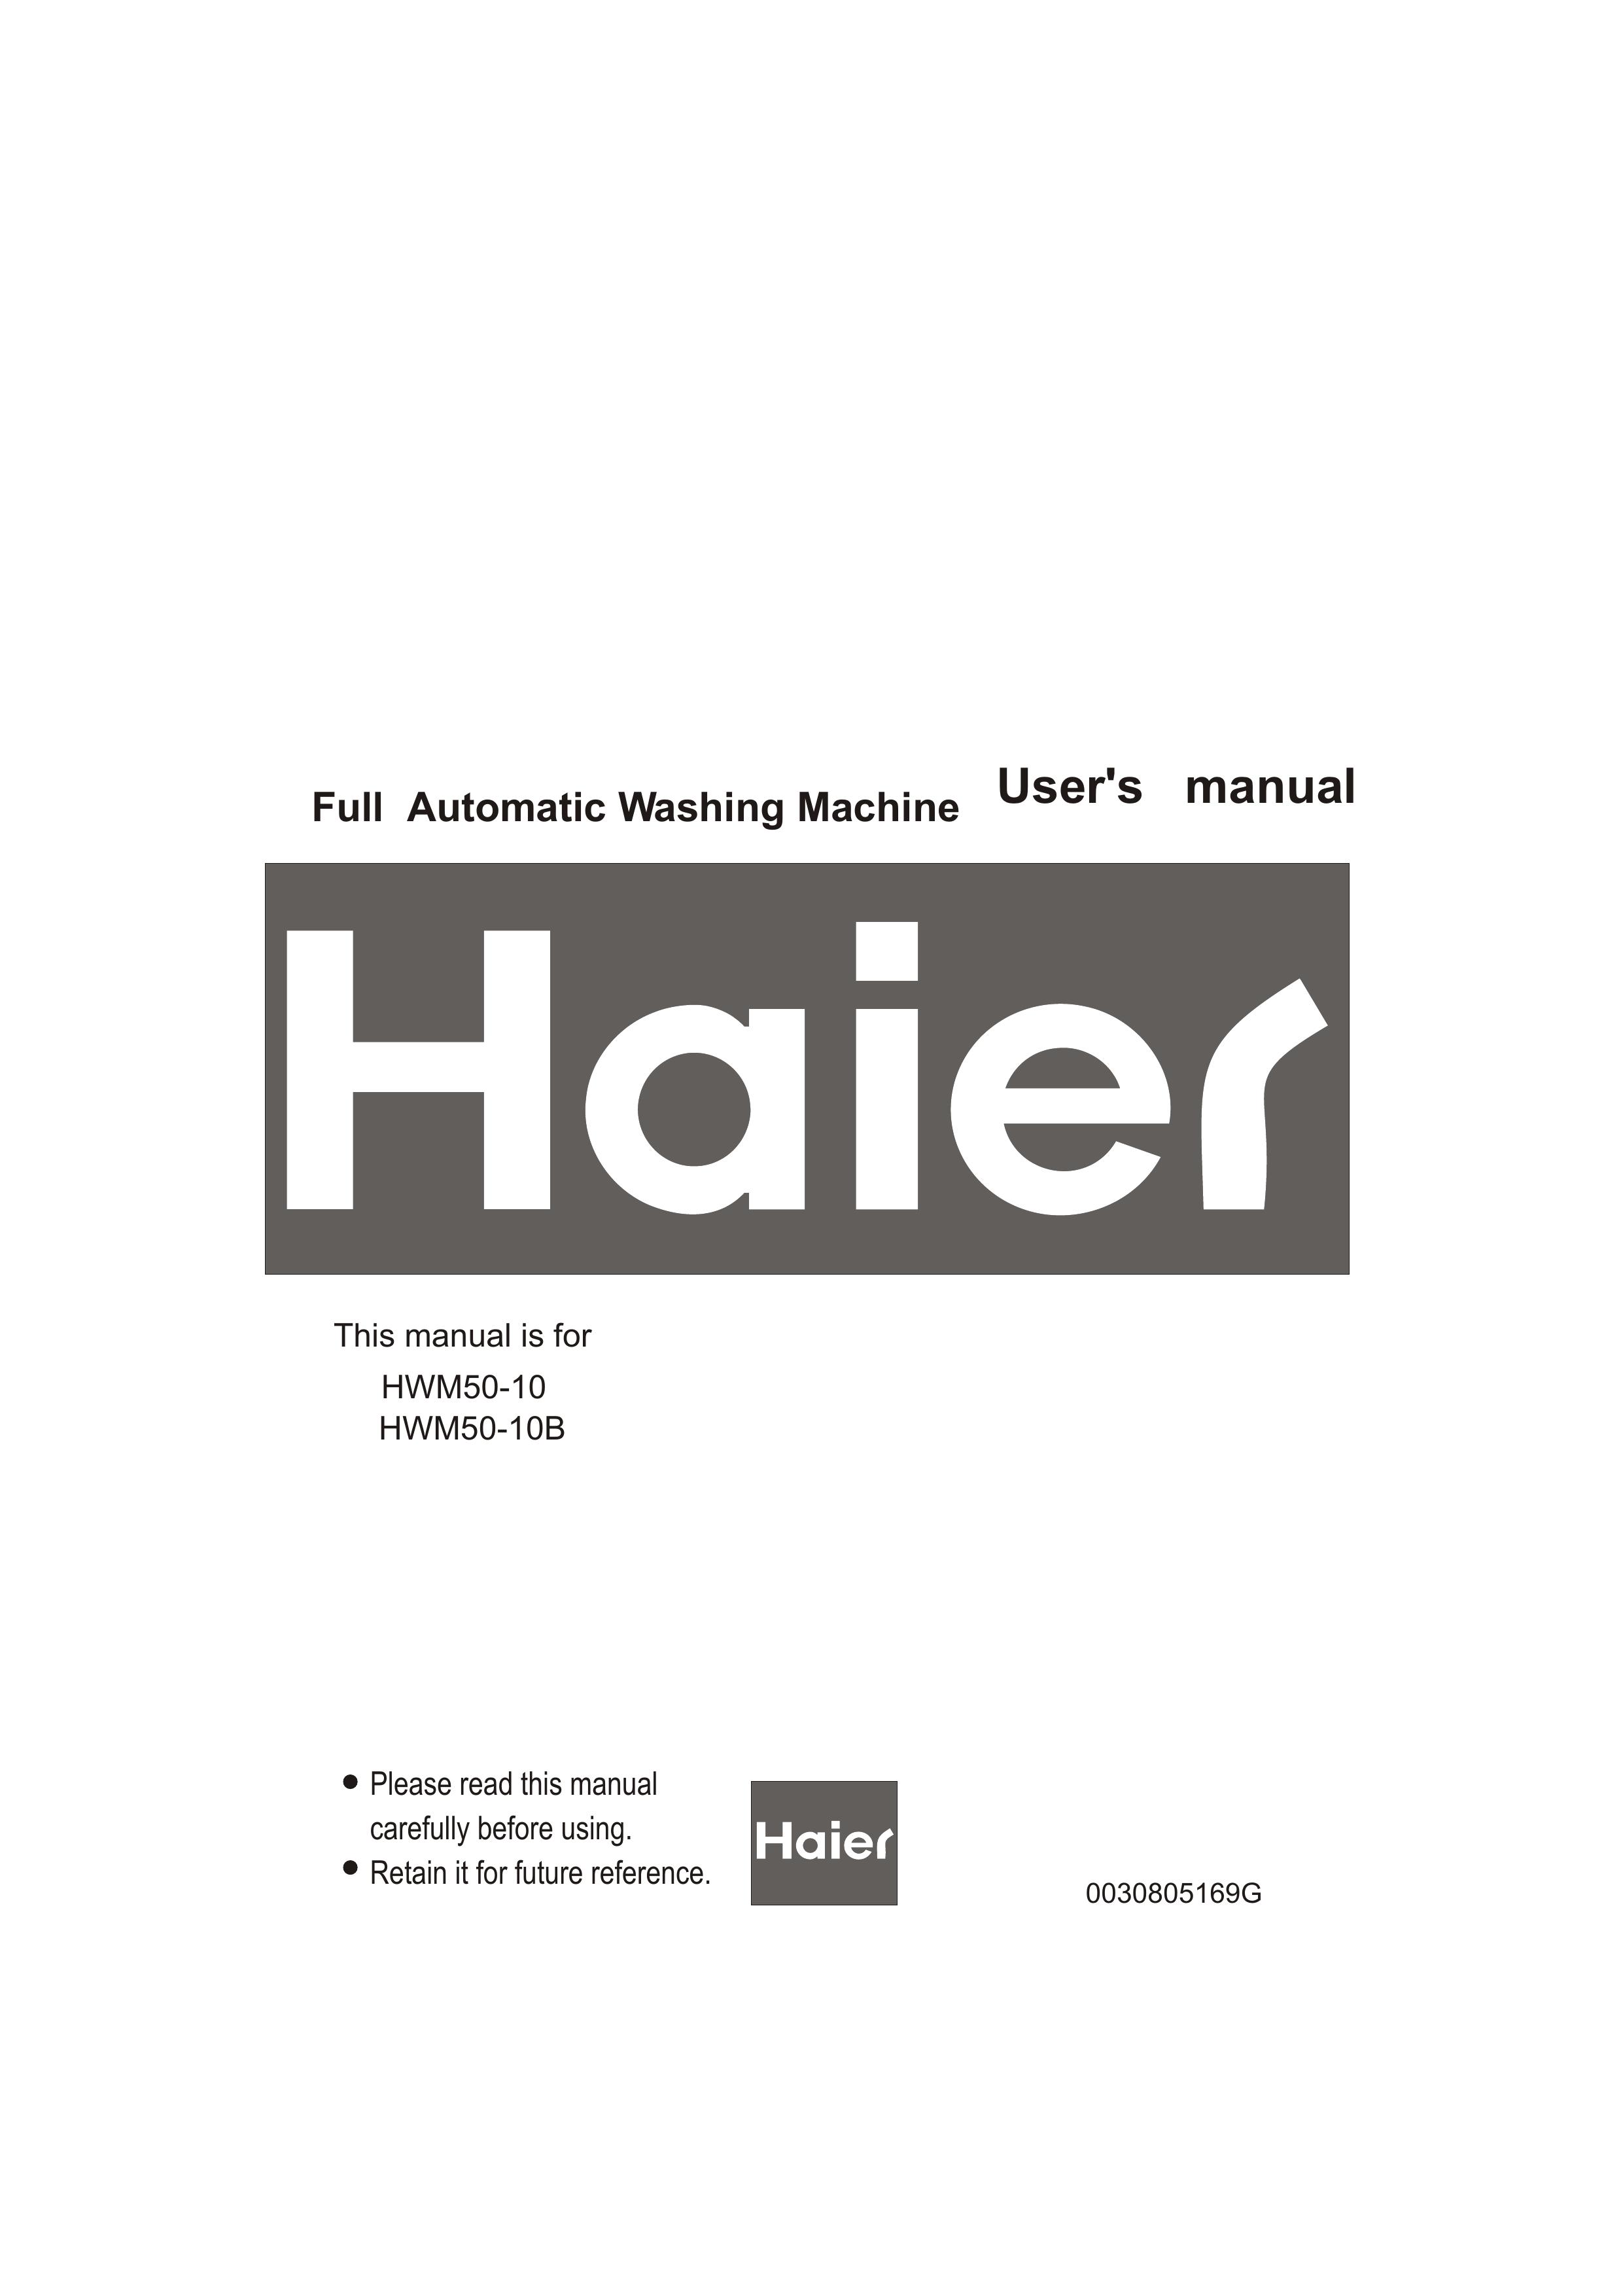 Haier HWM50-10 Washer/Dryer User Manual